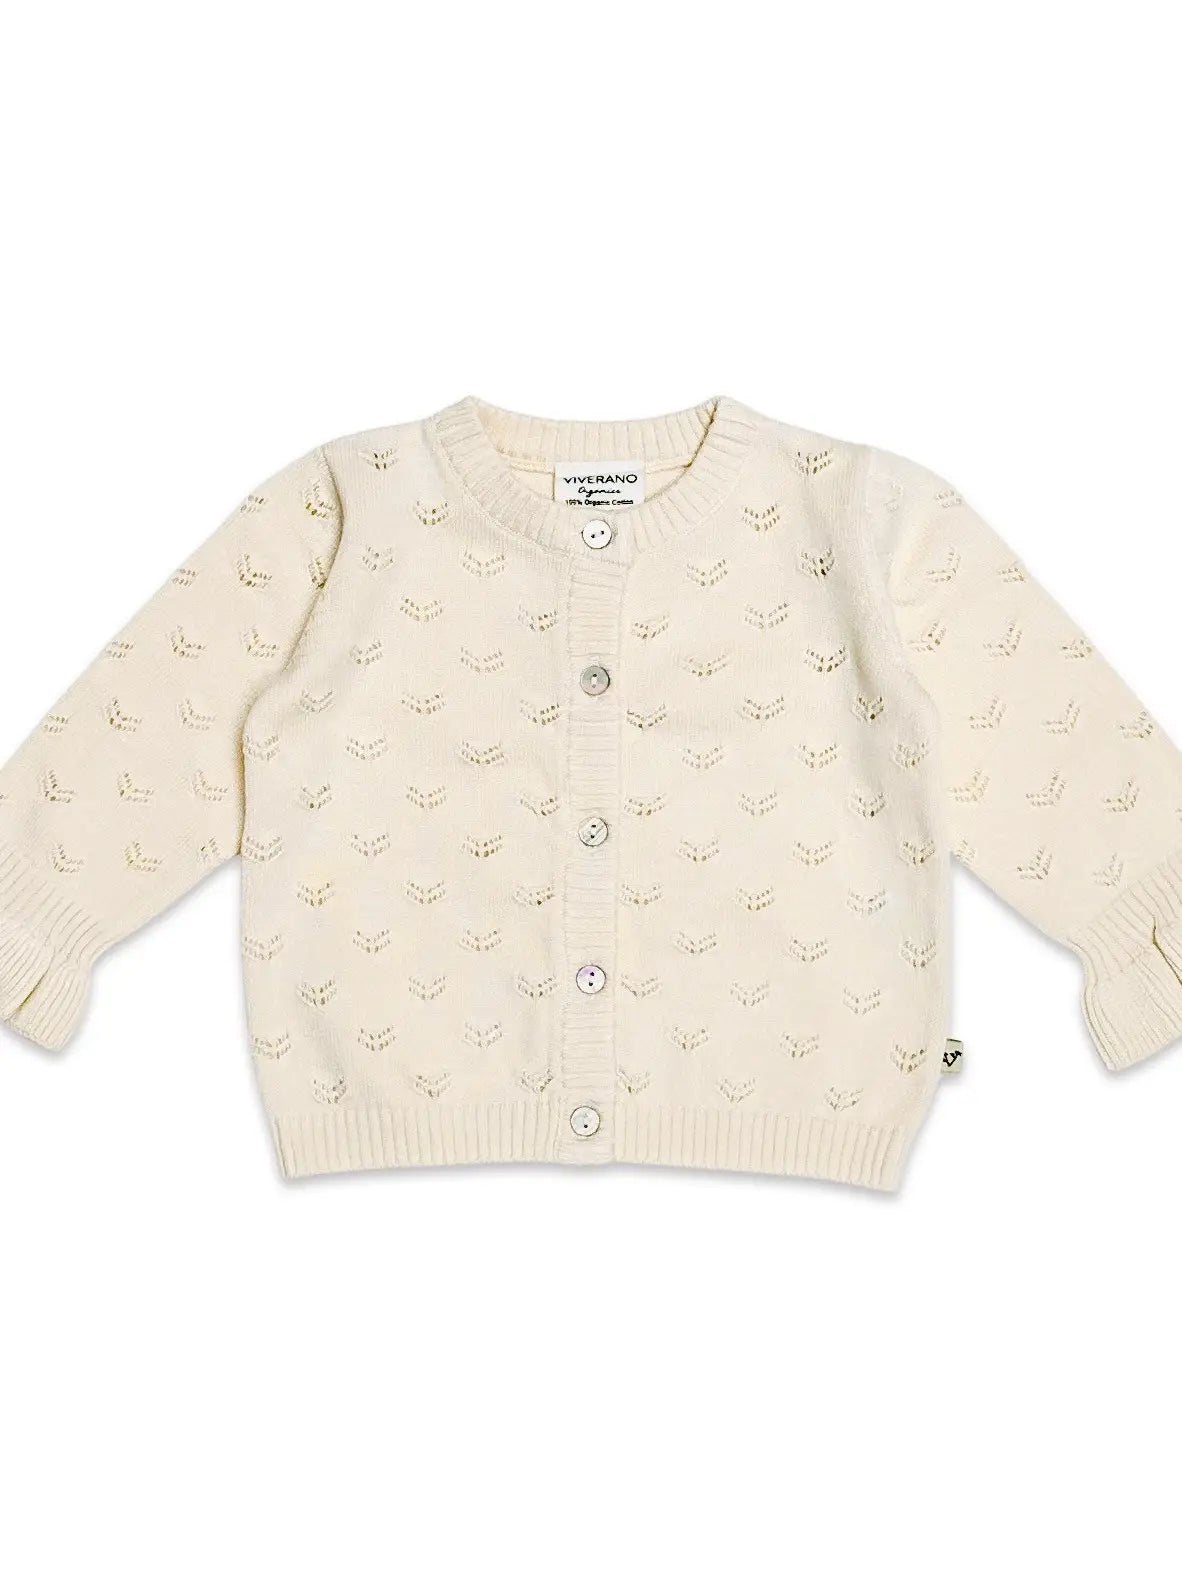 Viverano Organics Milan Pointelle Knit Ruffle Baby Cardigan Sweater (Organic) - Cream